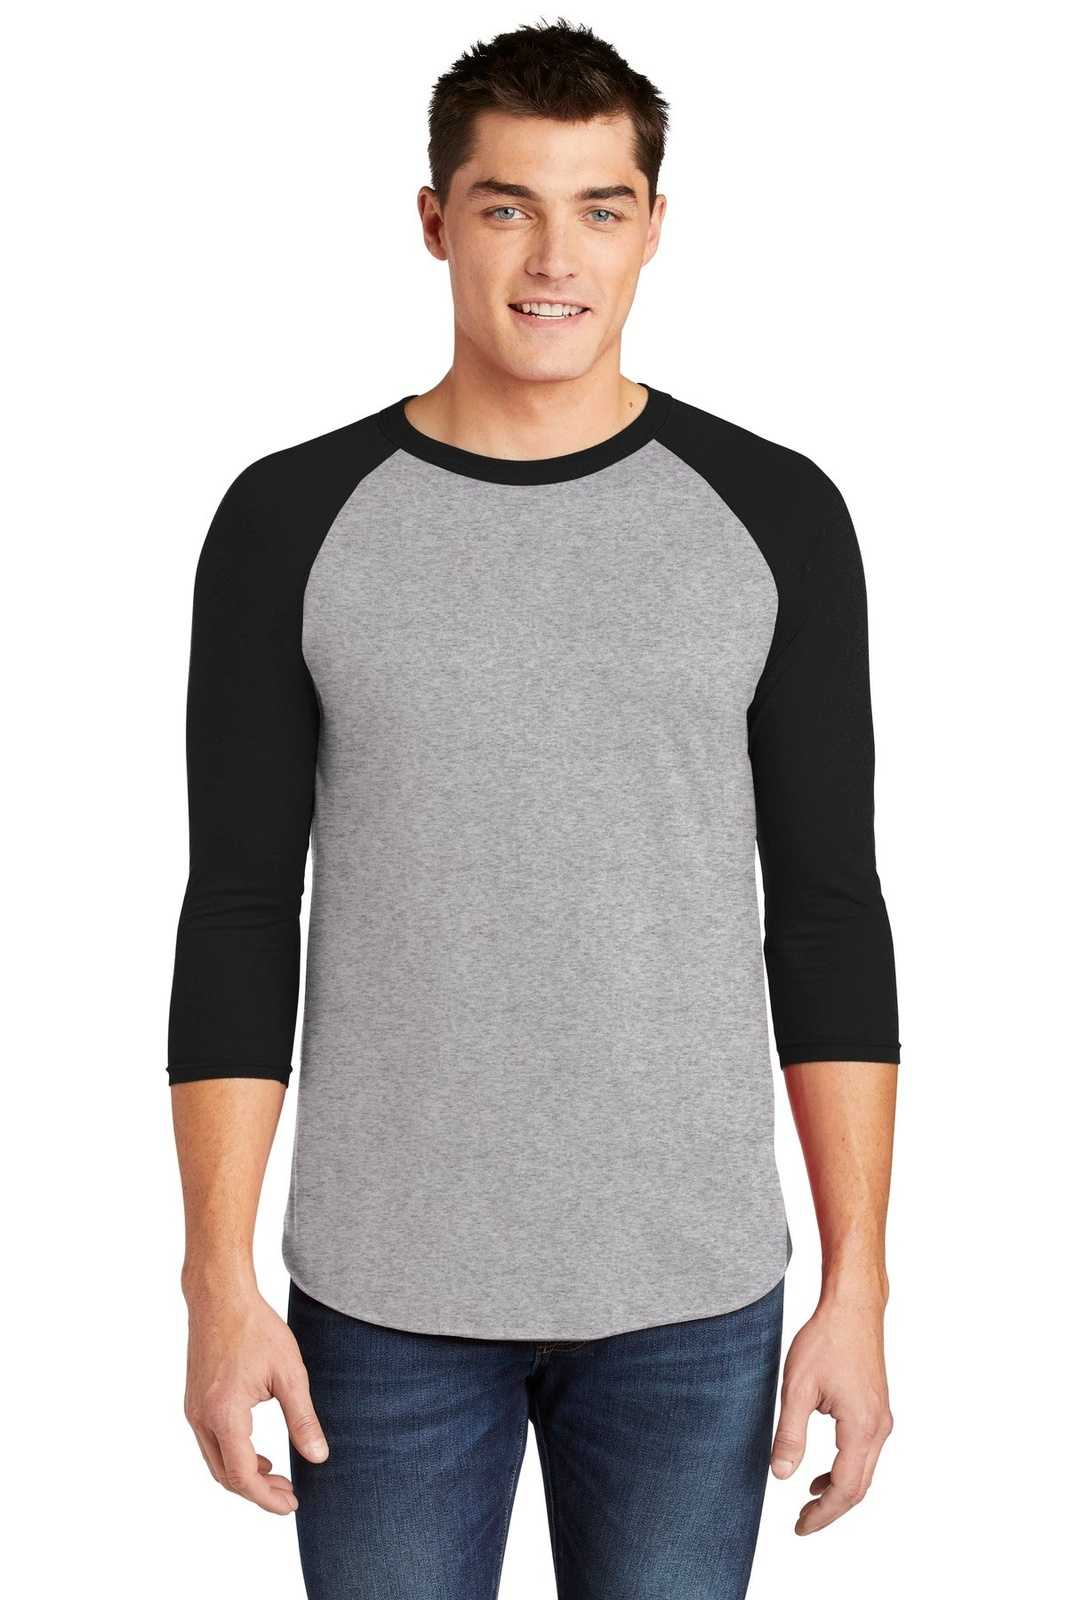 American Apparel BB453W Poly-Cotton 3/4-Sleeve Raglan T-Shirt - Heather Gray Black - HIT a Double